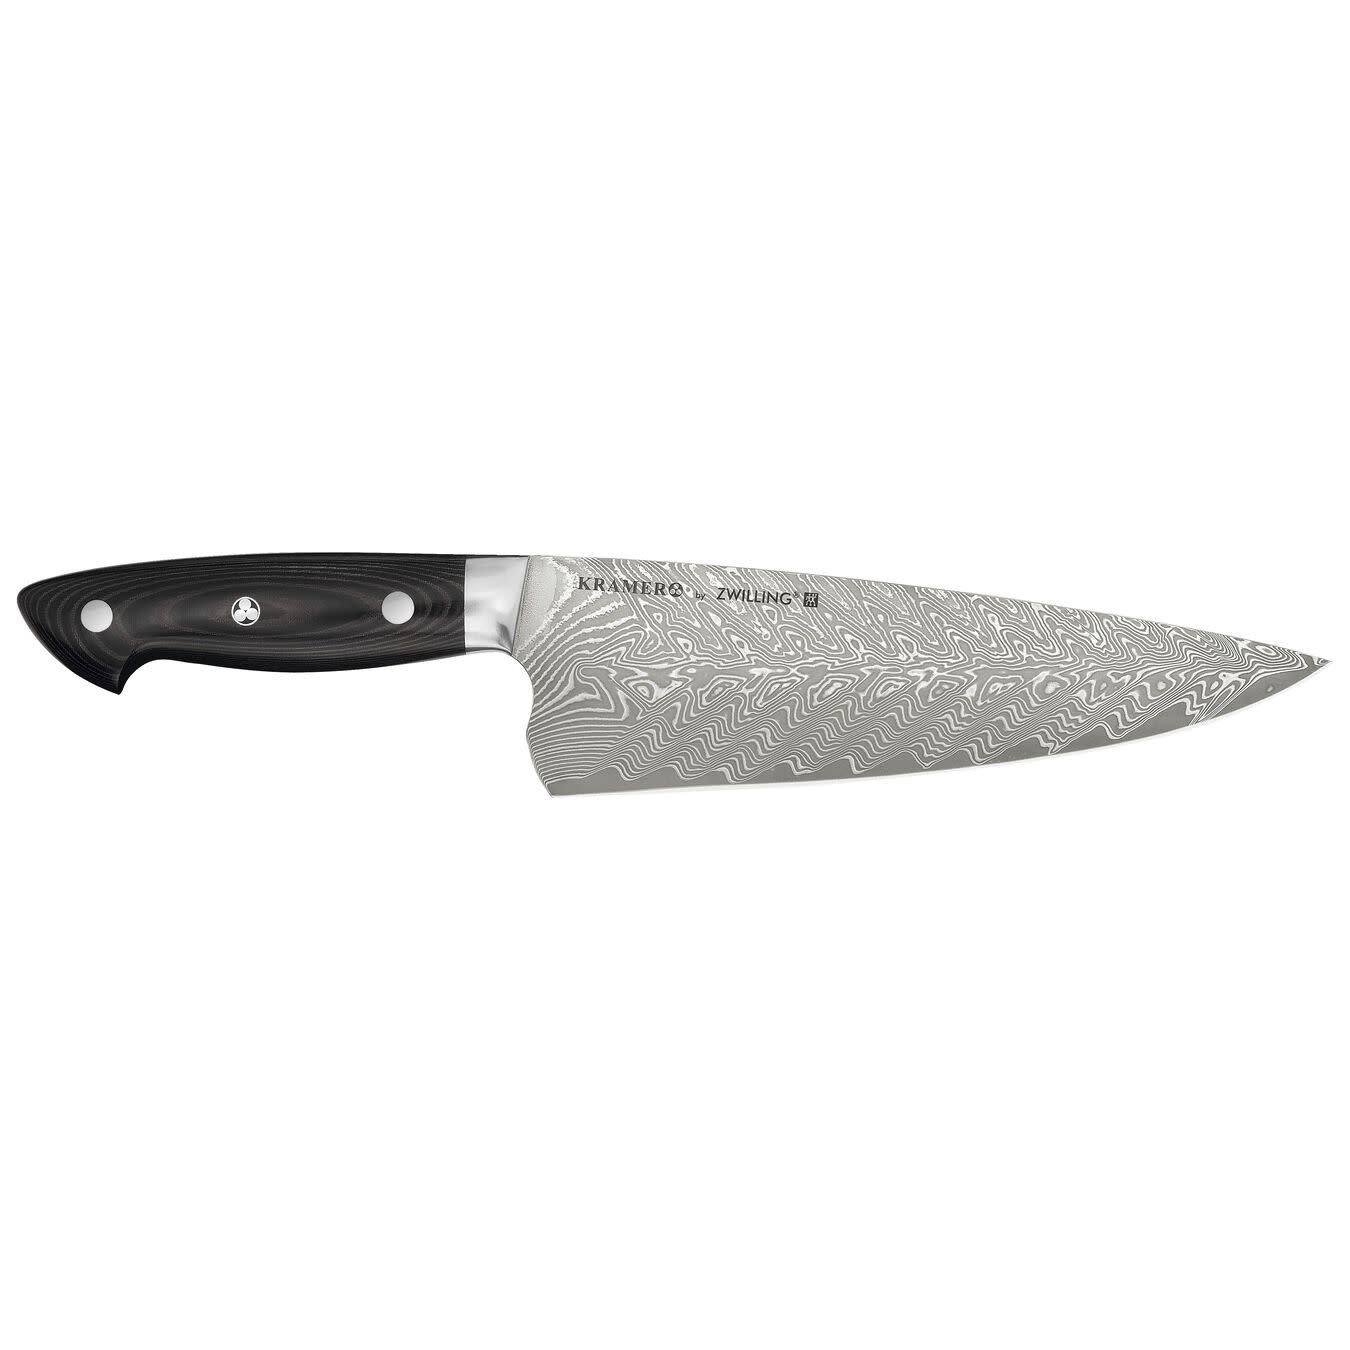 Bob Kramer Euroline Damascus Chef Knife 8"